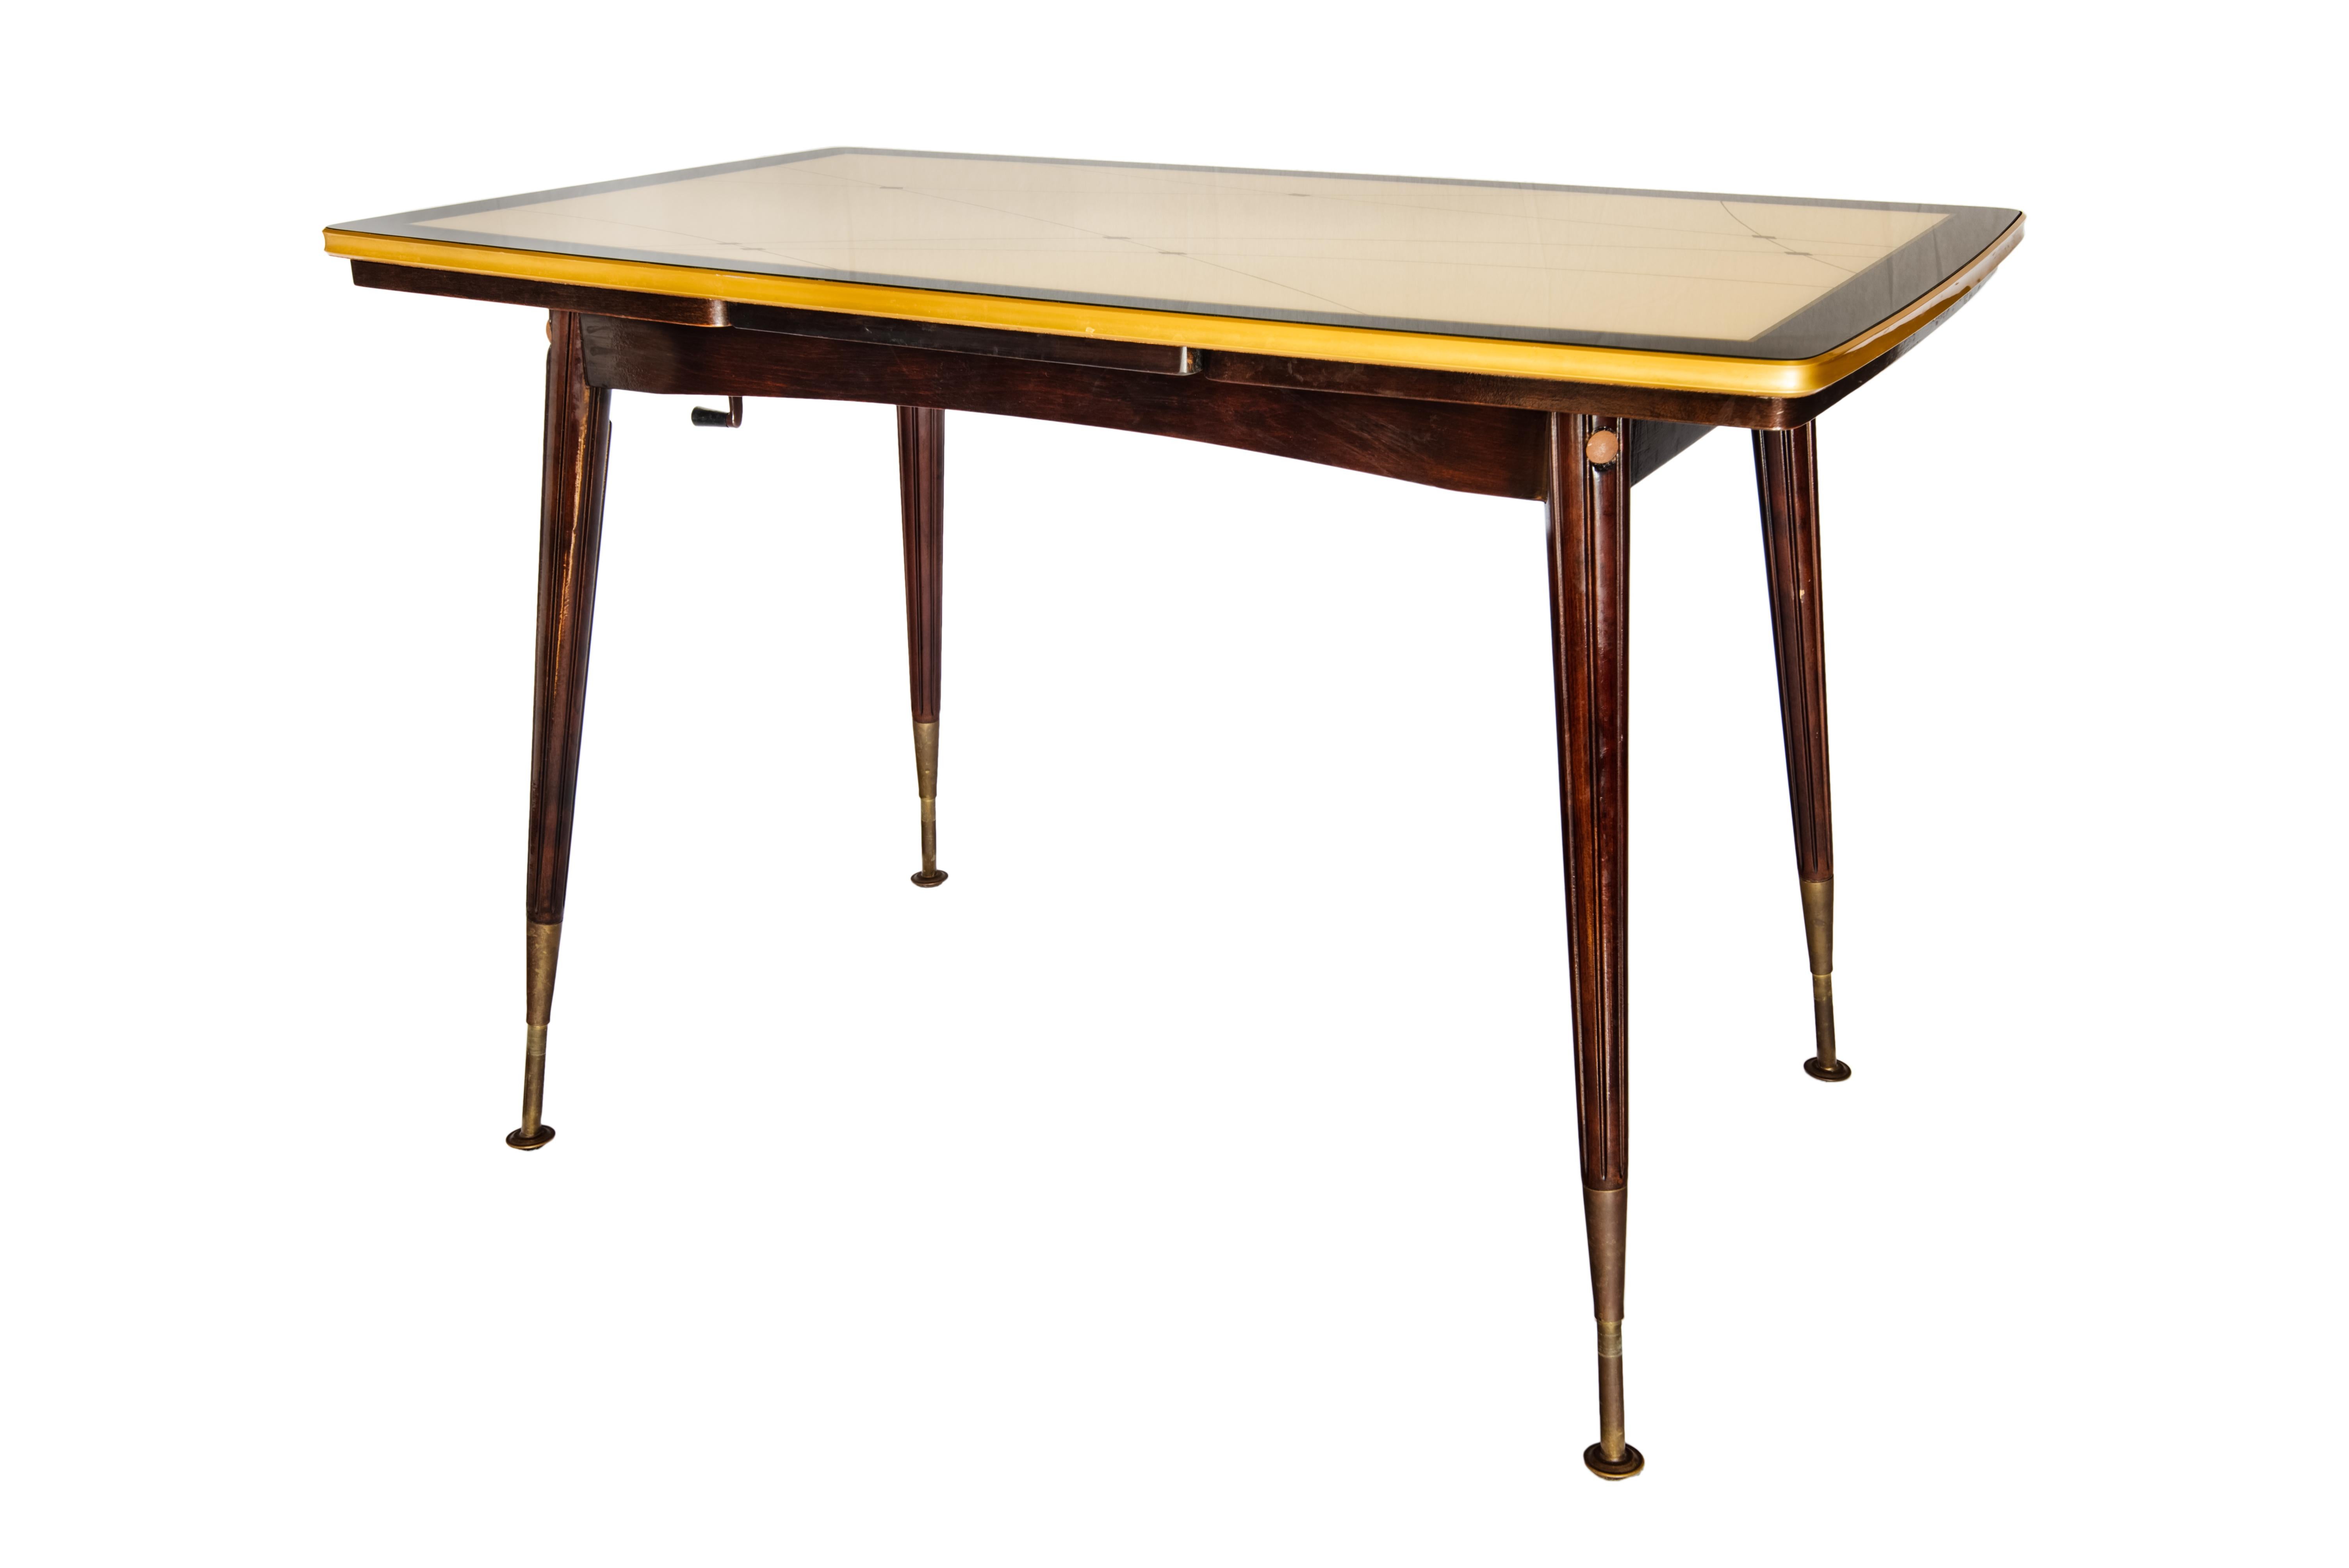 German Midcentury Mahogany Extendable Lifting Table, Resopal Glass Plate, Ilse Möbel